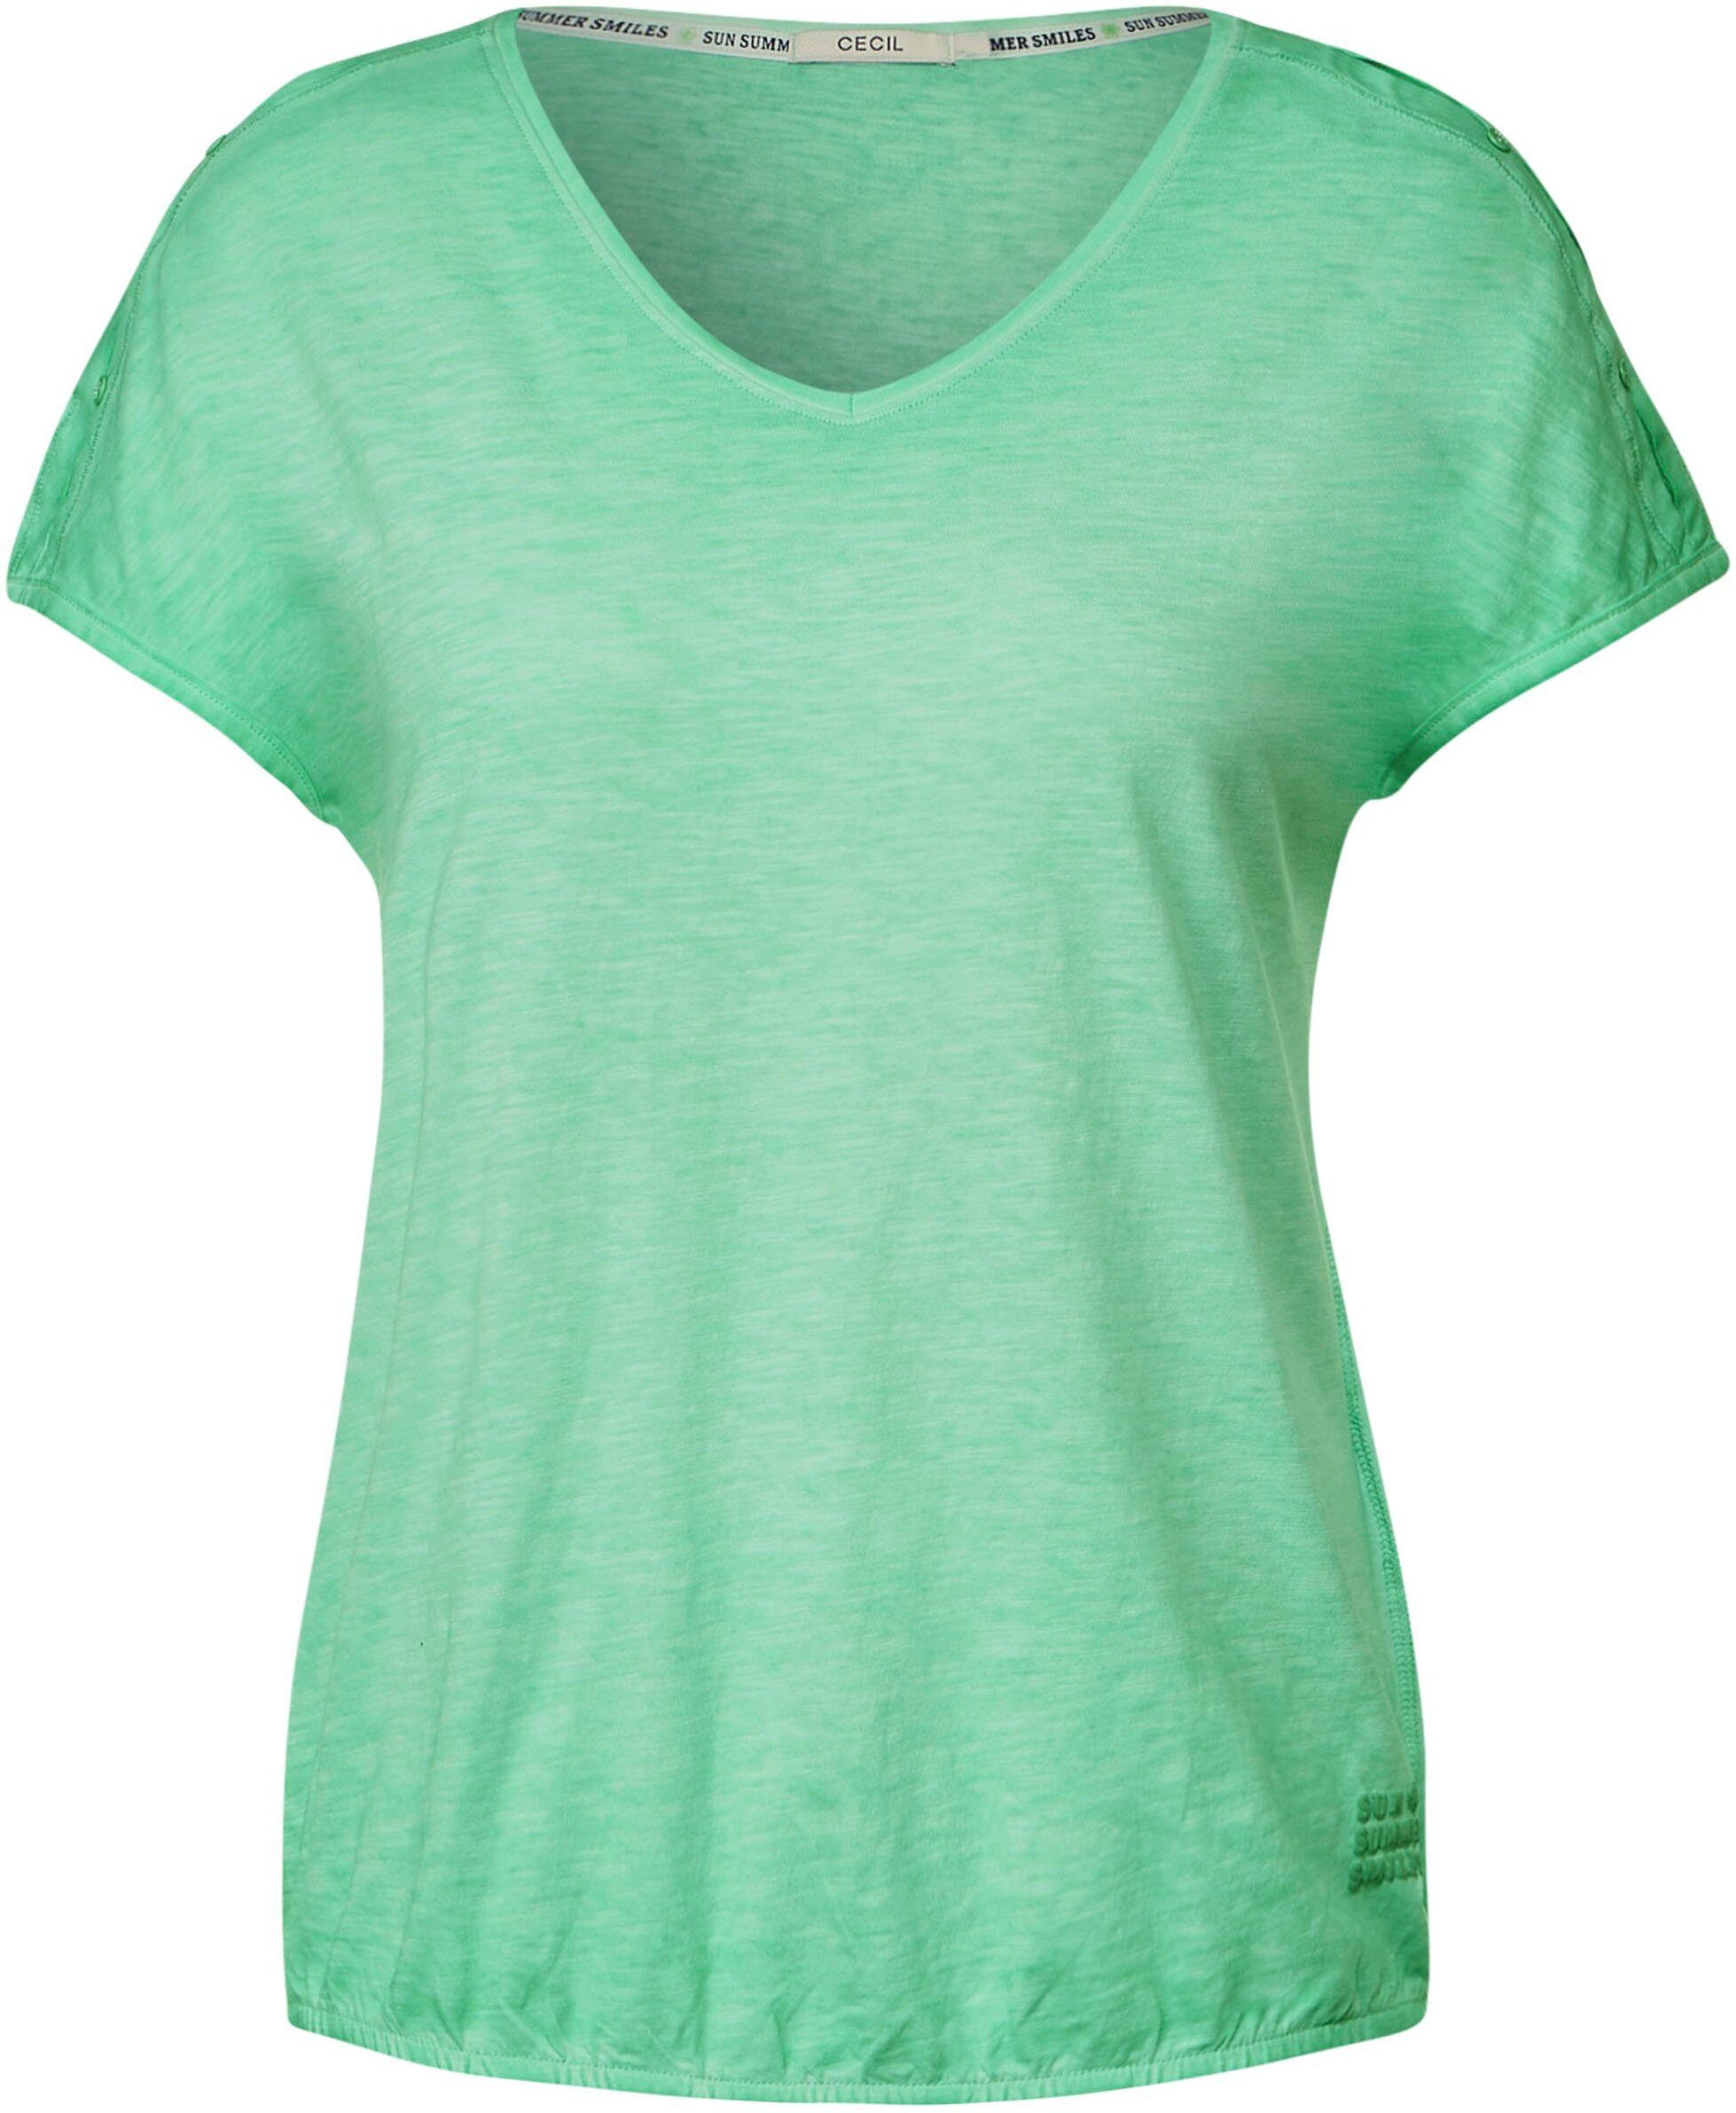 Cecil T-Shirt fresh an den Cut-Outs Schultern green mit